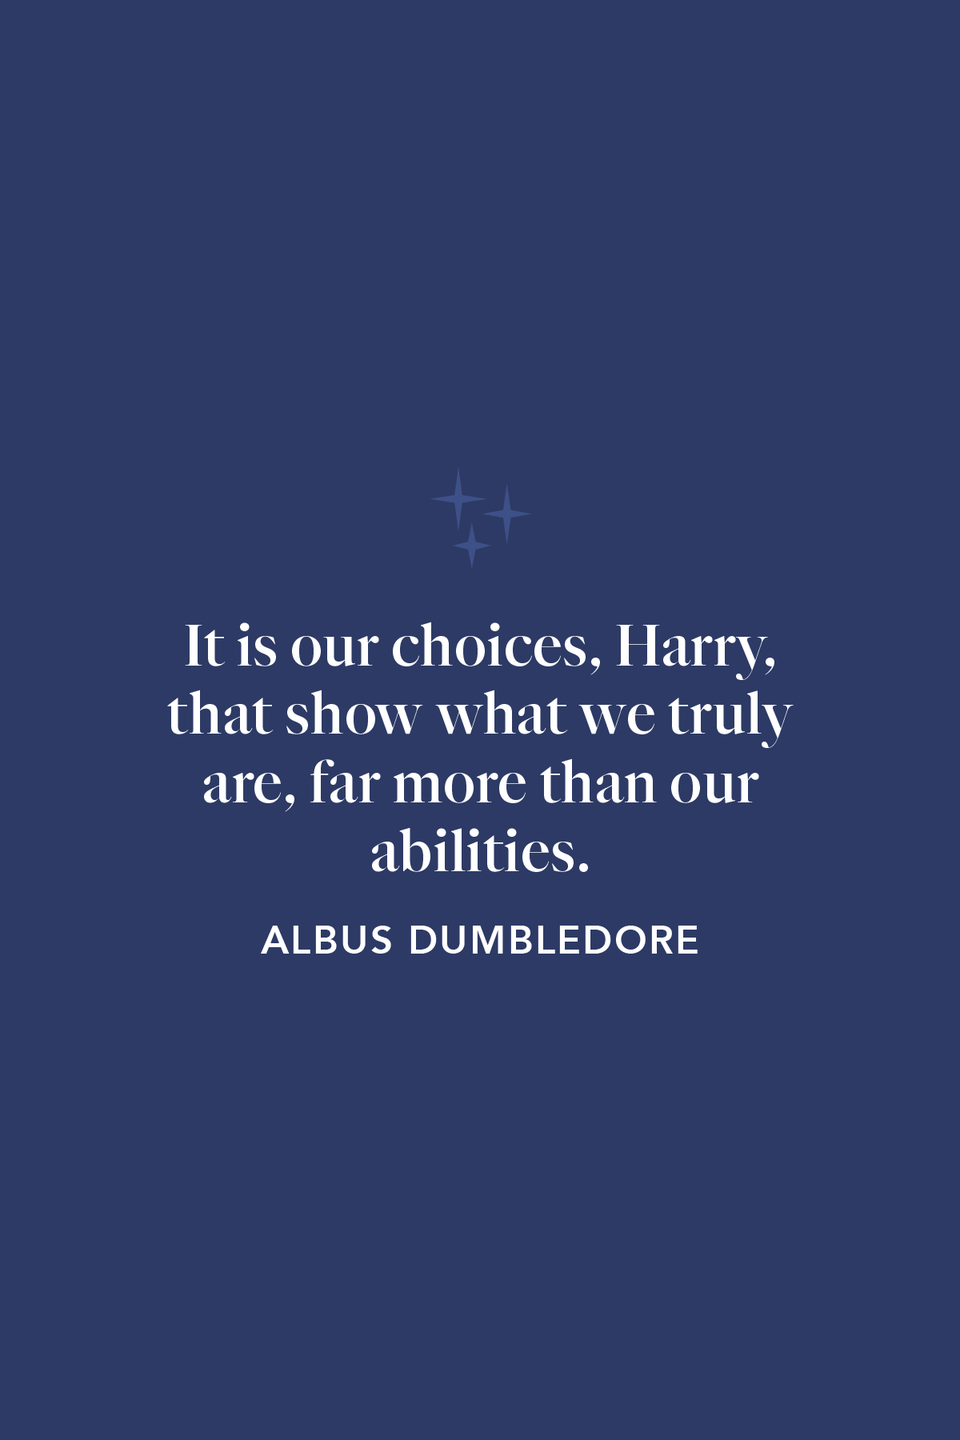 Dumbledore on making hard decisions